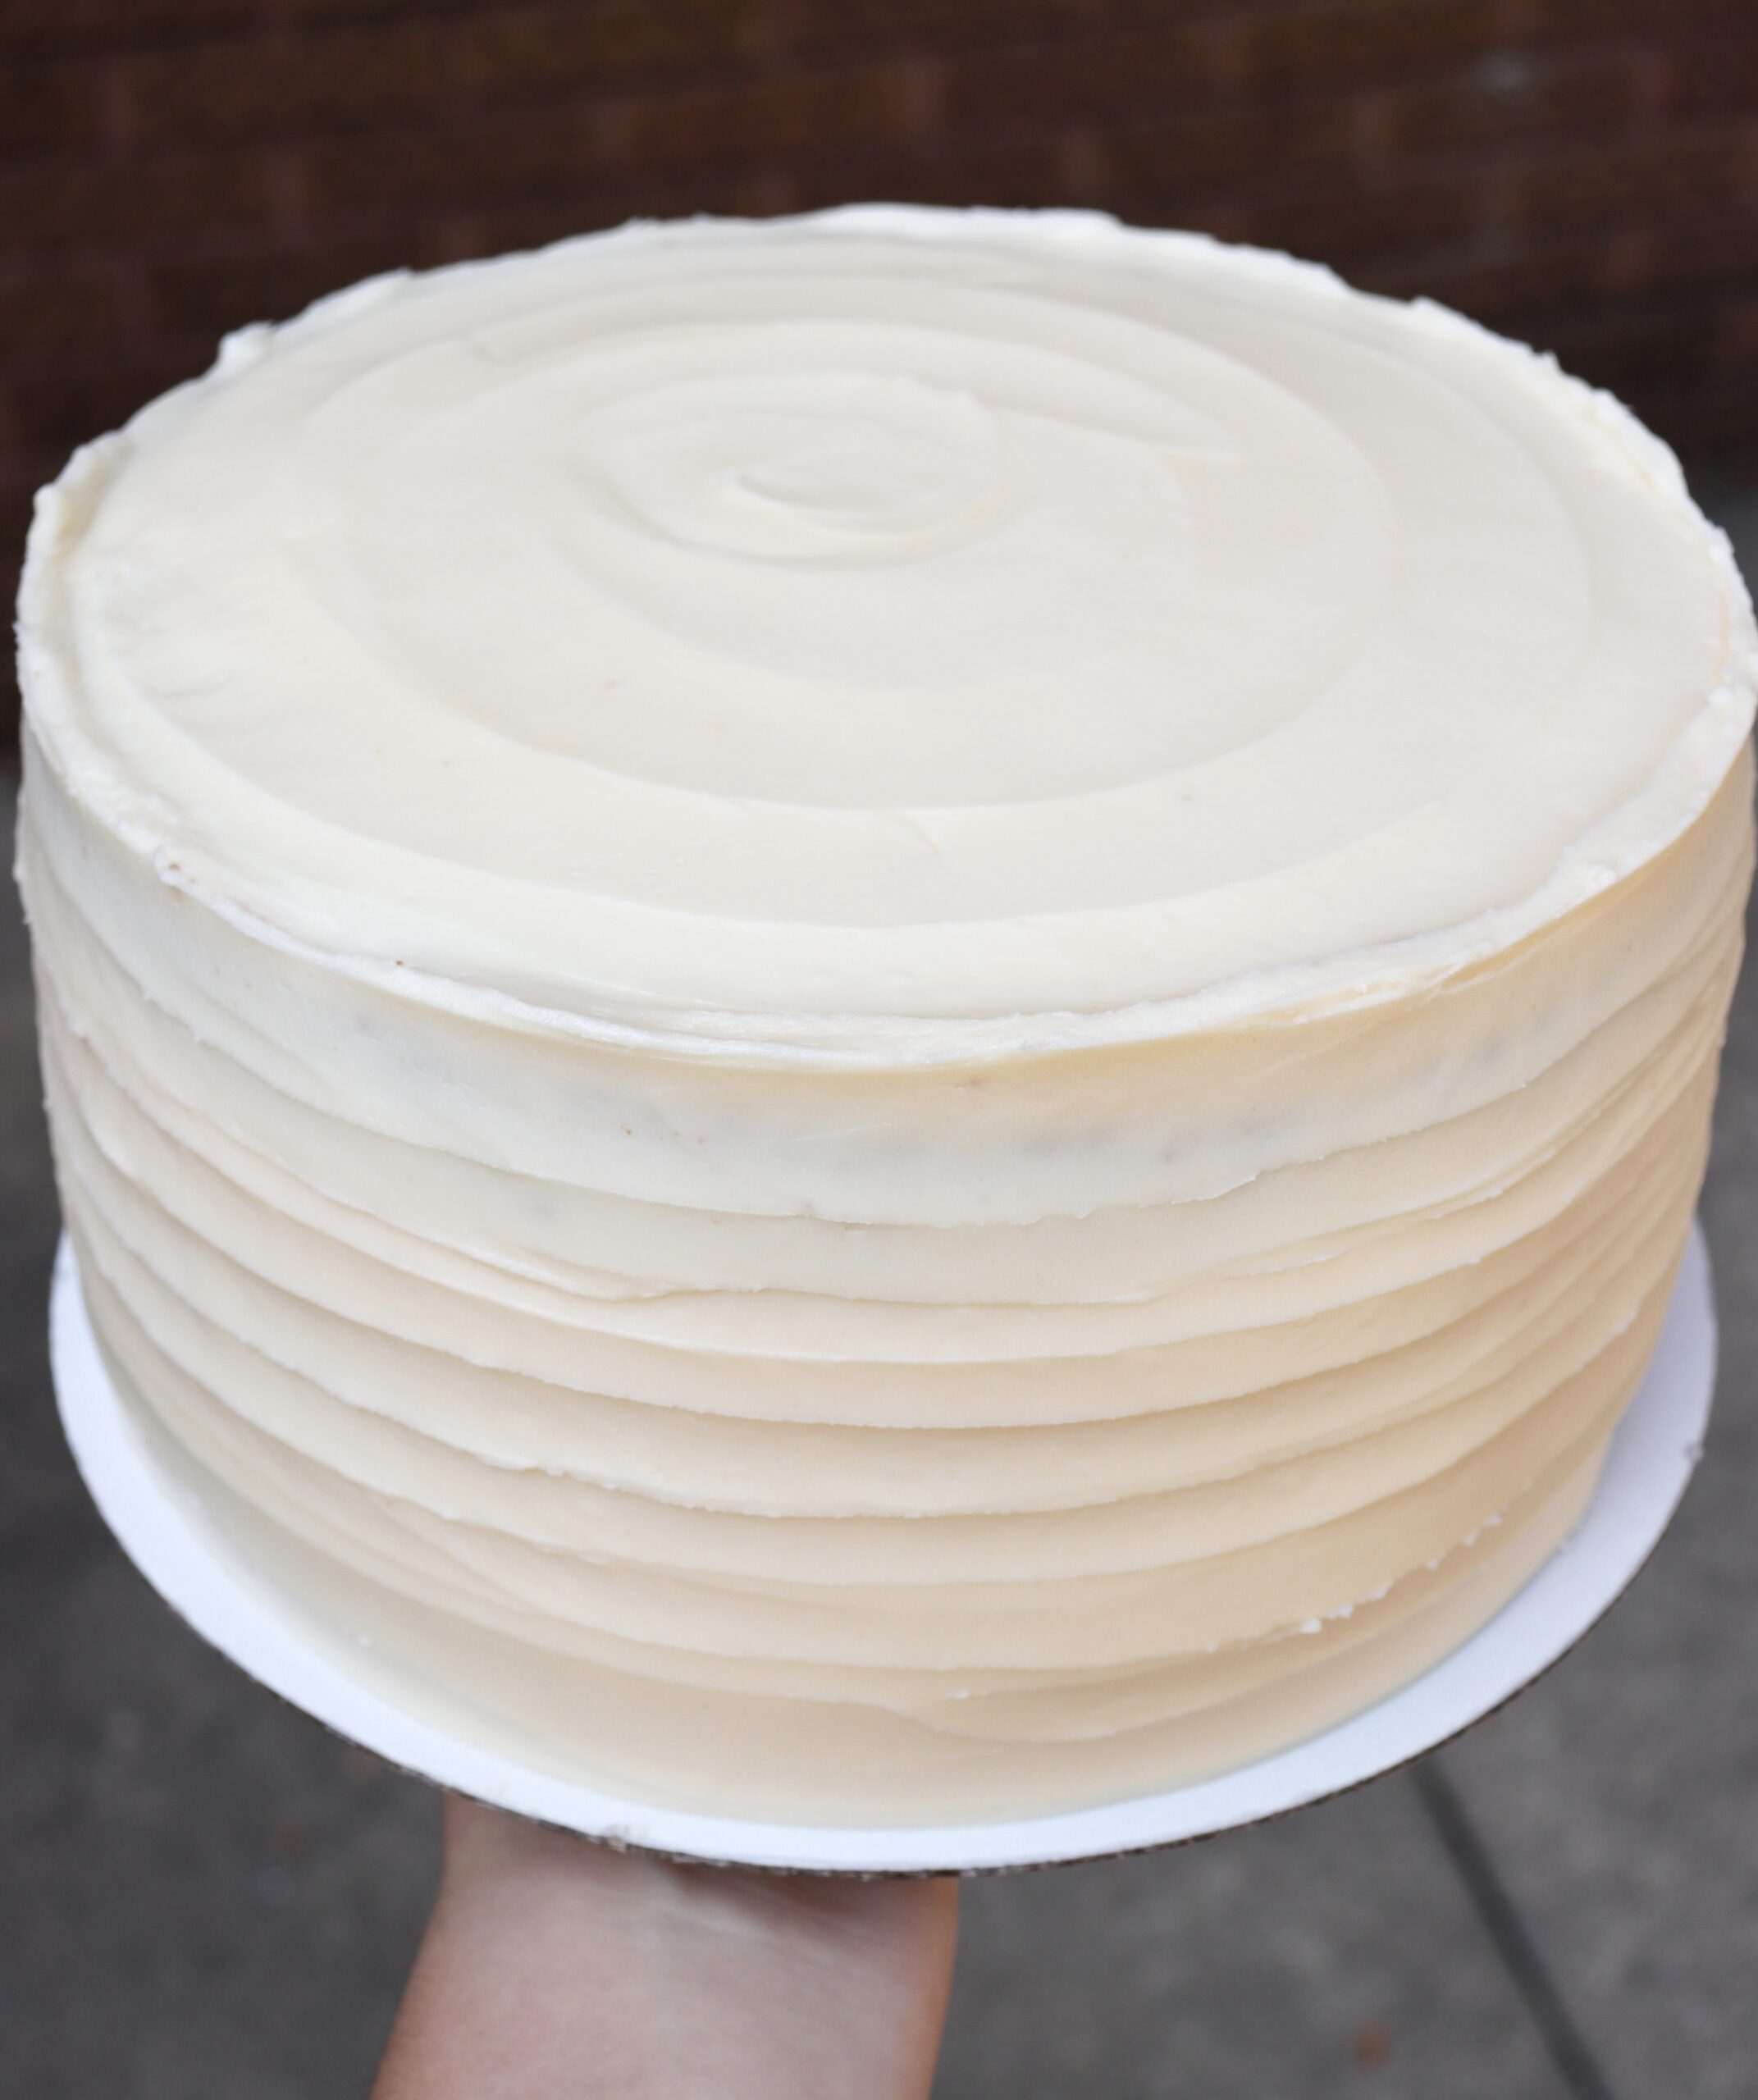 10 Best Birthday Cake Icing Recipes | Yummly